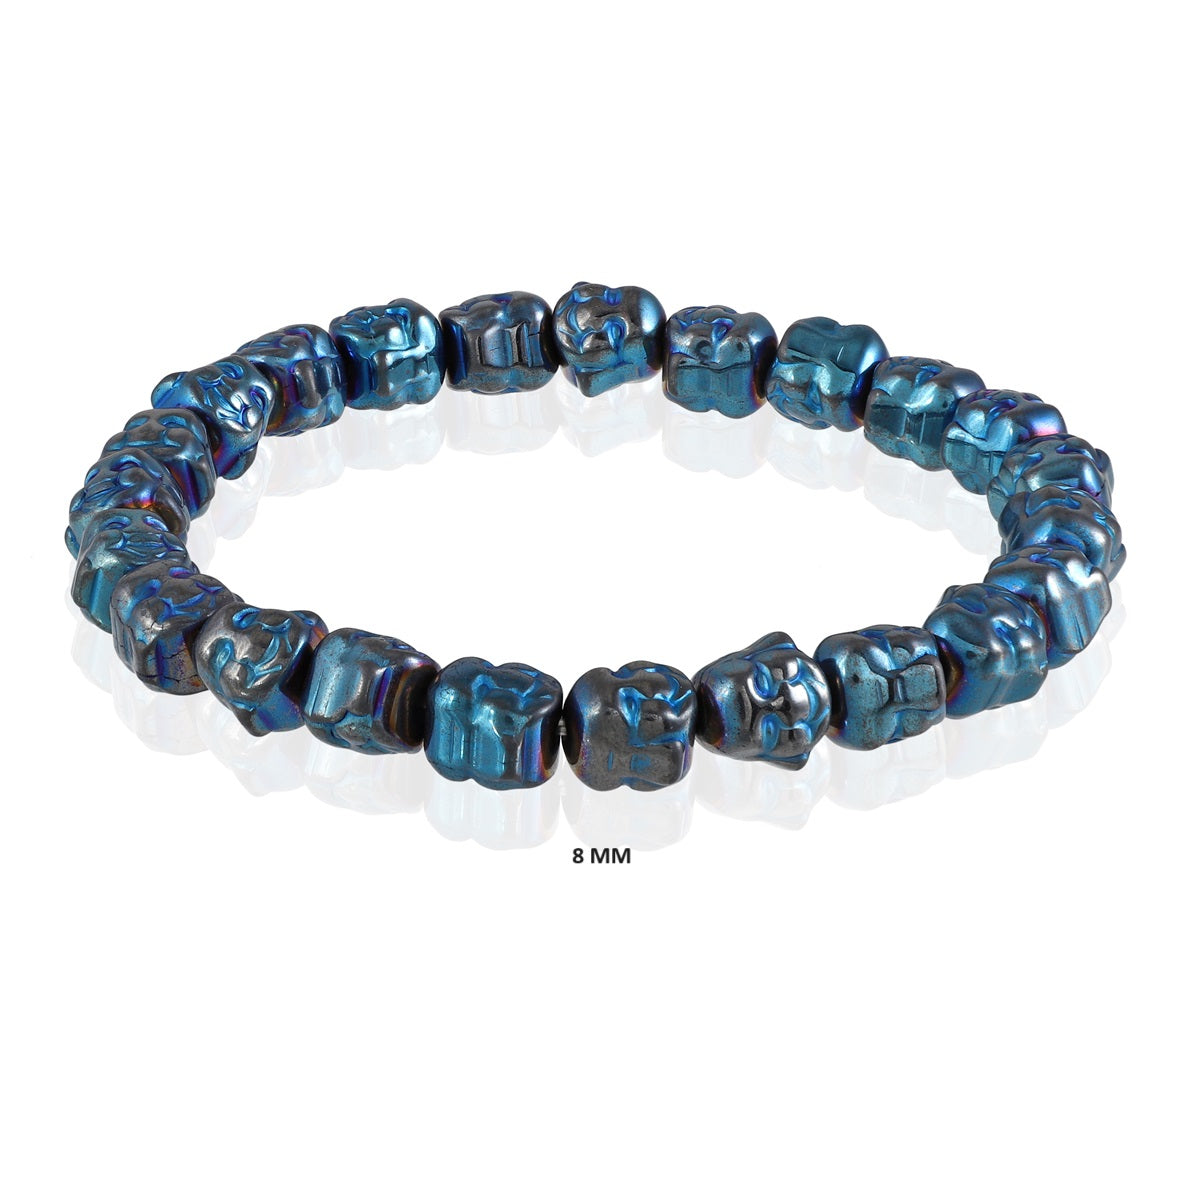 Serenity Sky: Blue Hematite Laughing Buddha Stretch Bracelet